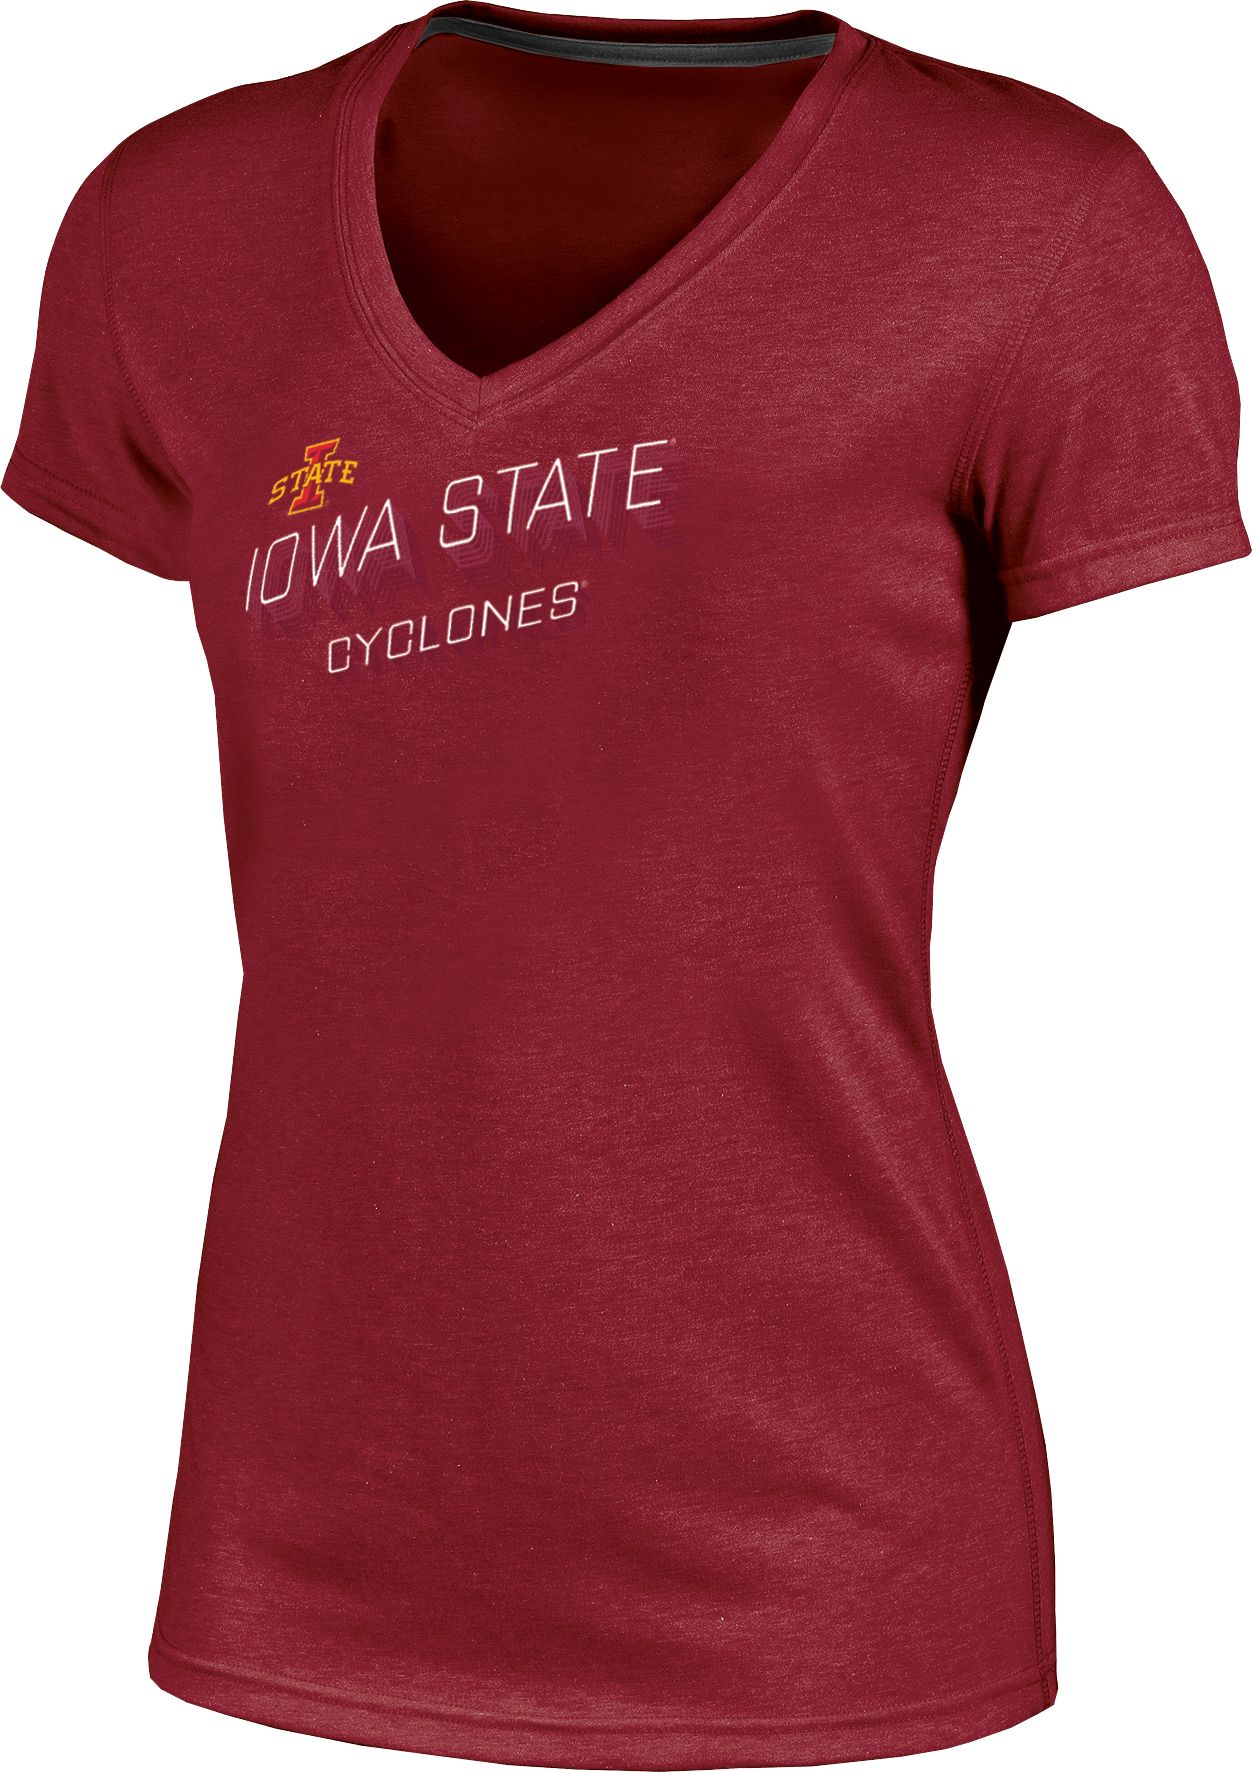 Iowa State Cyclones Women's Apparel | DICK'S Sporting Goods